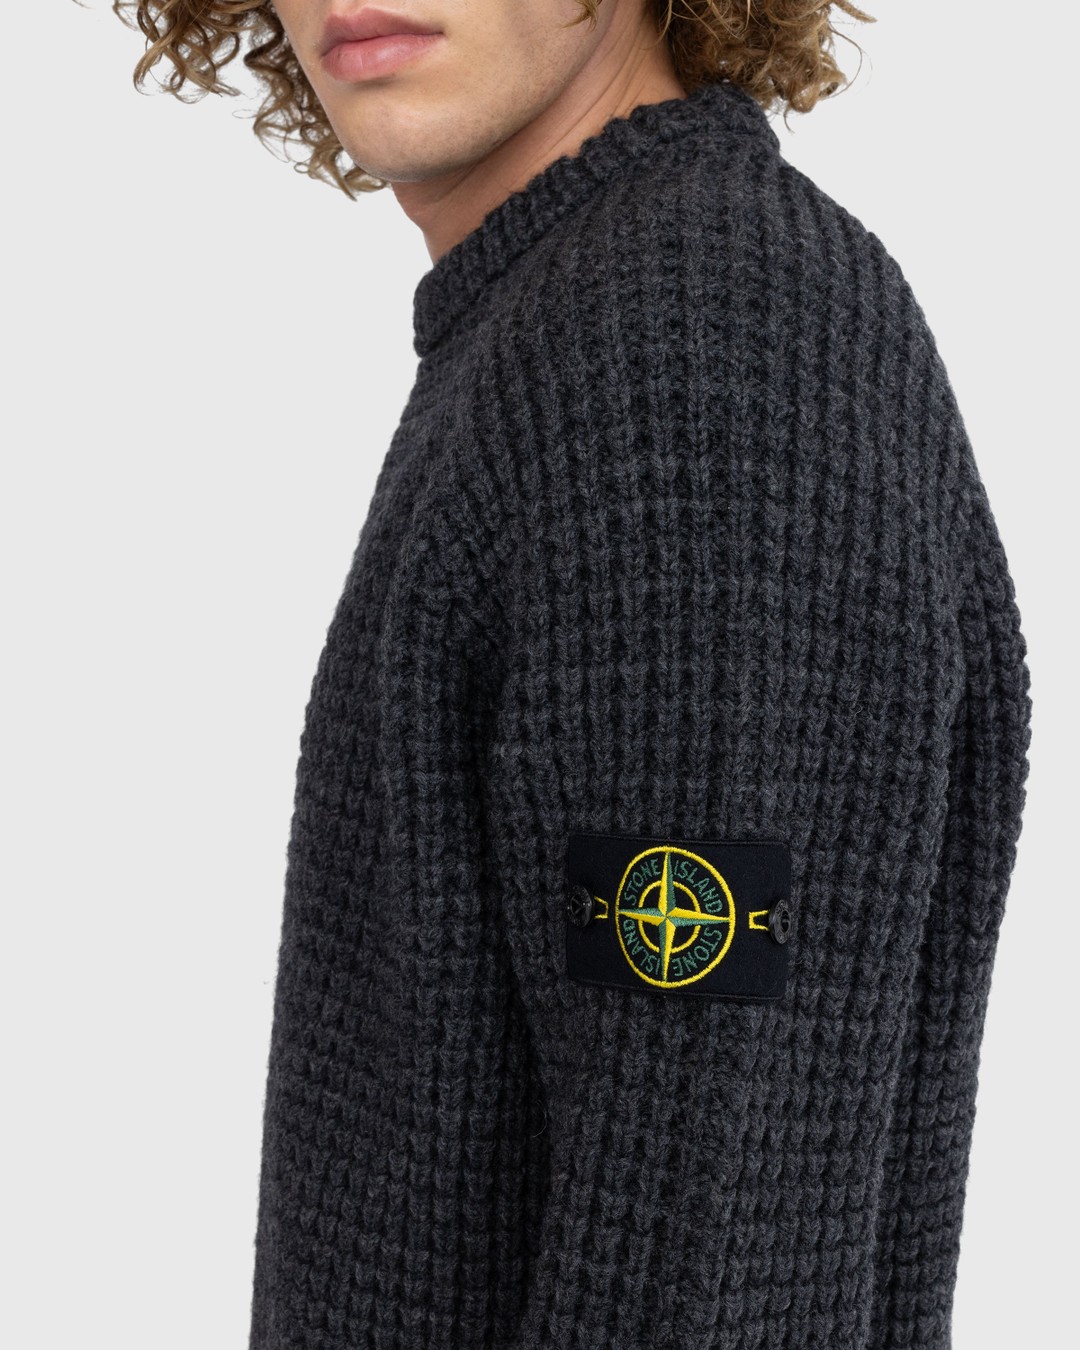 Stone Island – Waffle Knit Sweater Melange Charcoal - Knitwear - Grey - Image 4